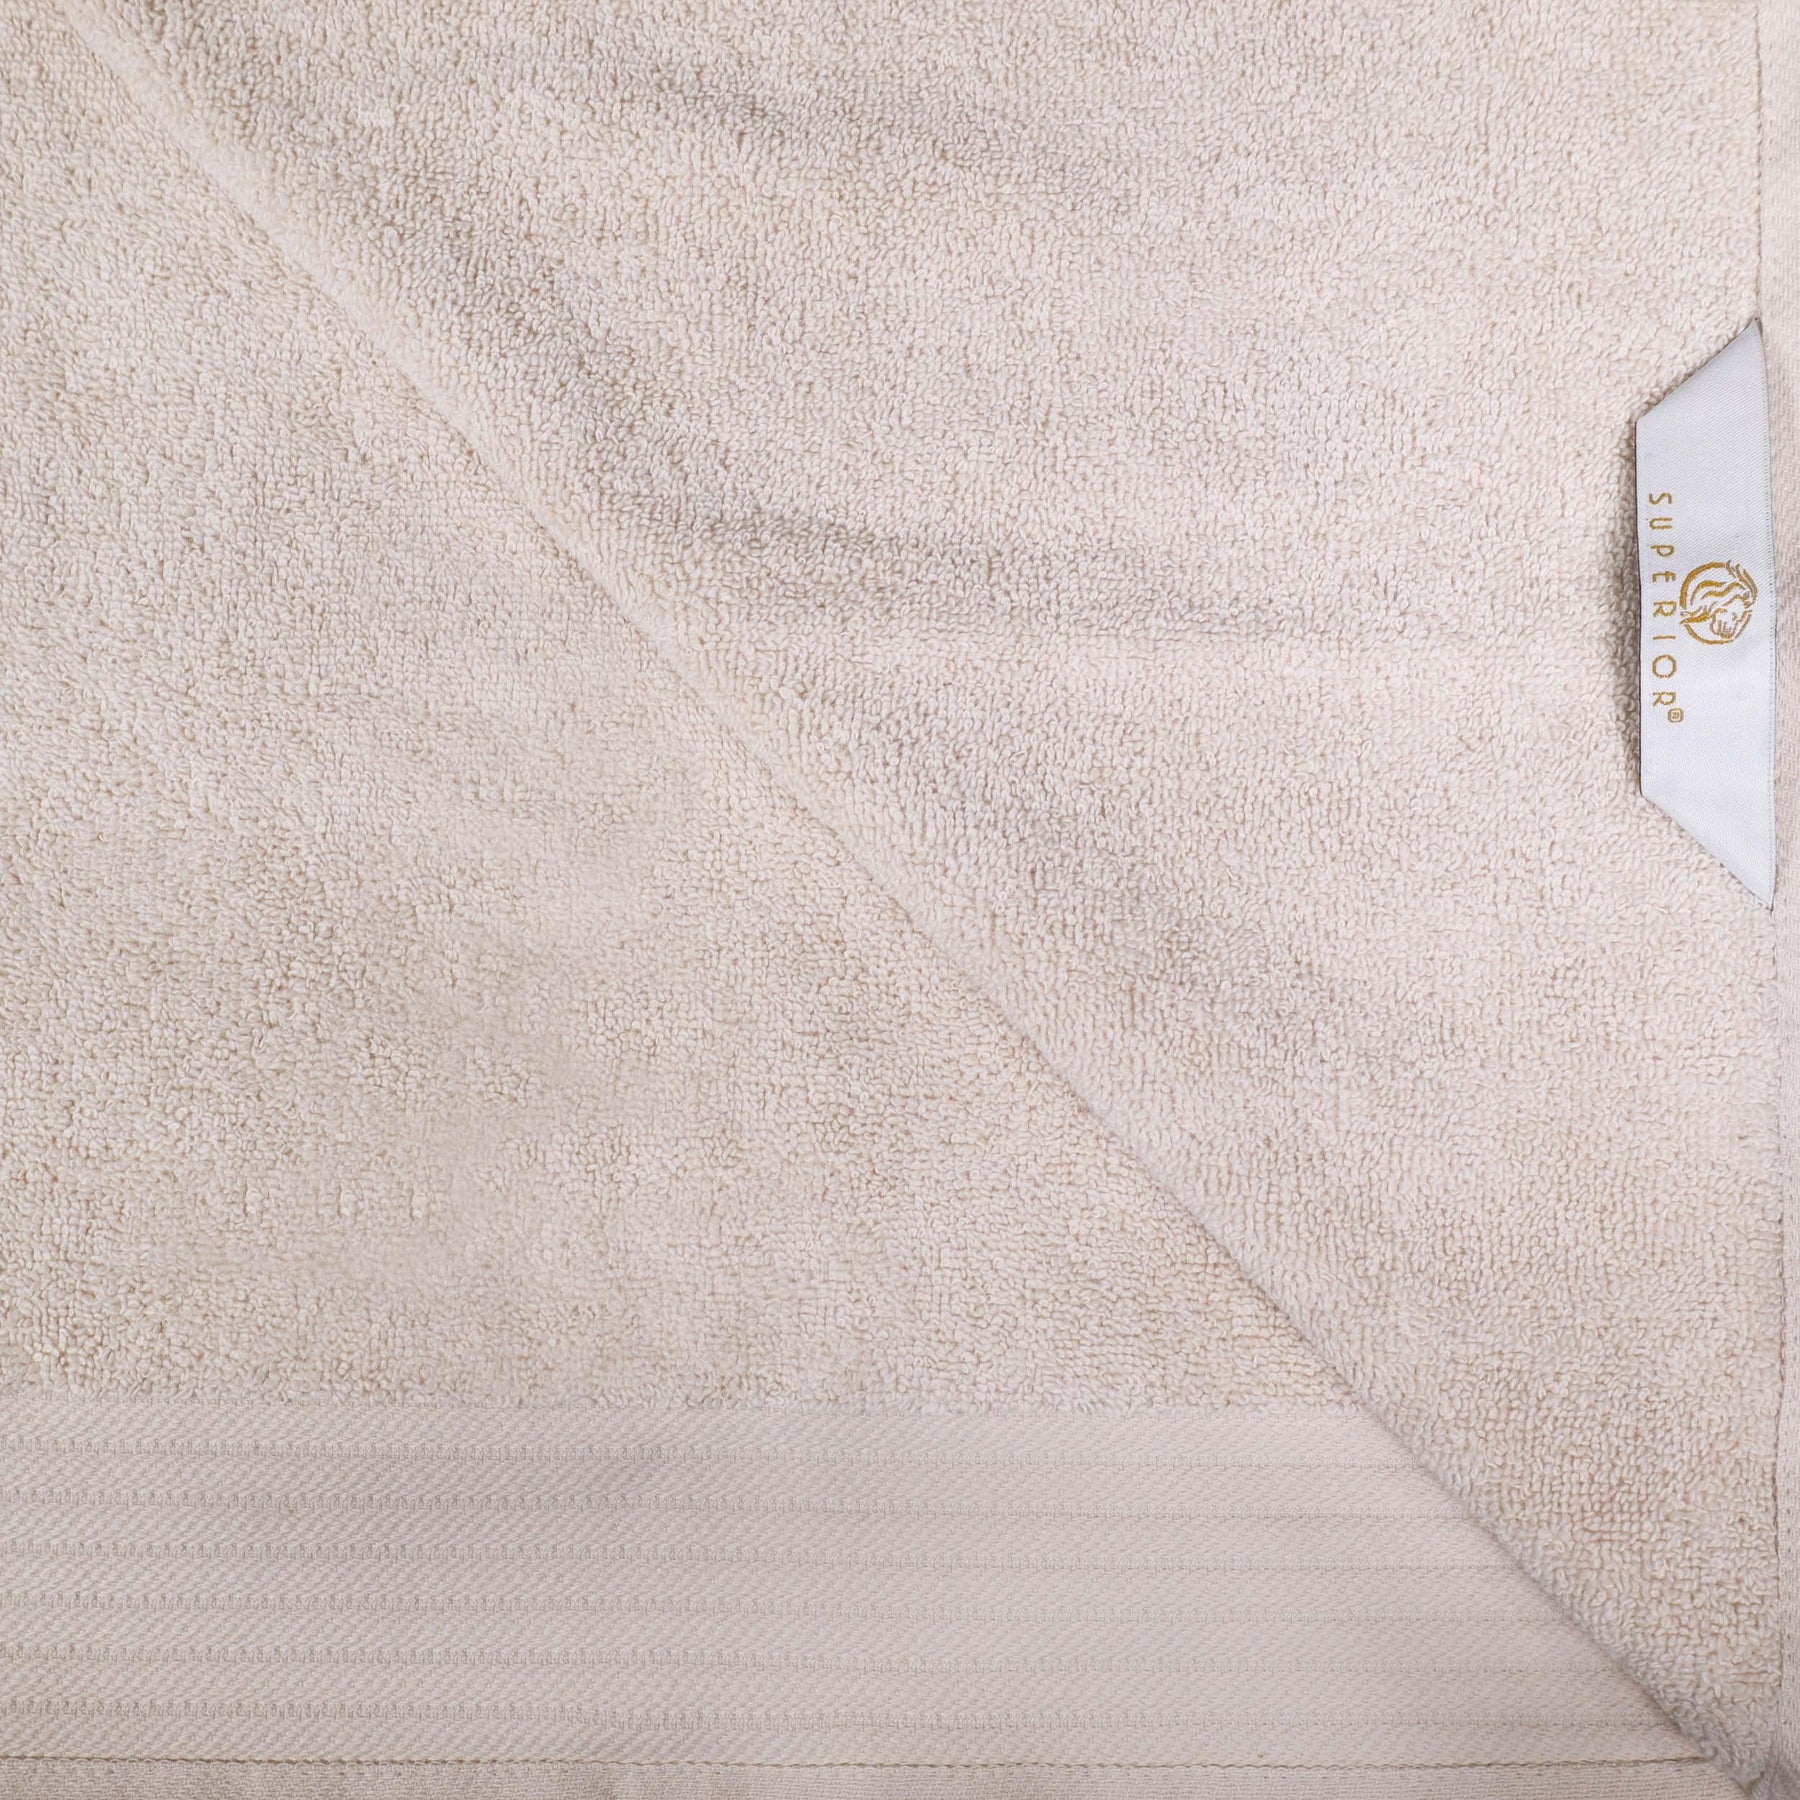 Premium Turkish Cotton Jacquard Herringbone and Solid 8-Piece Towel Set- Ivory